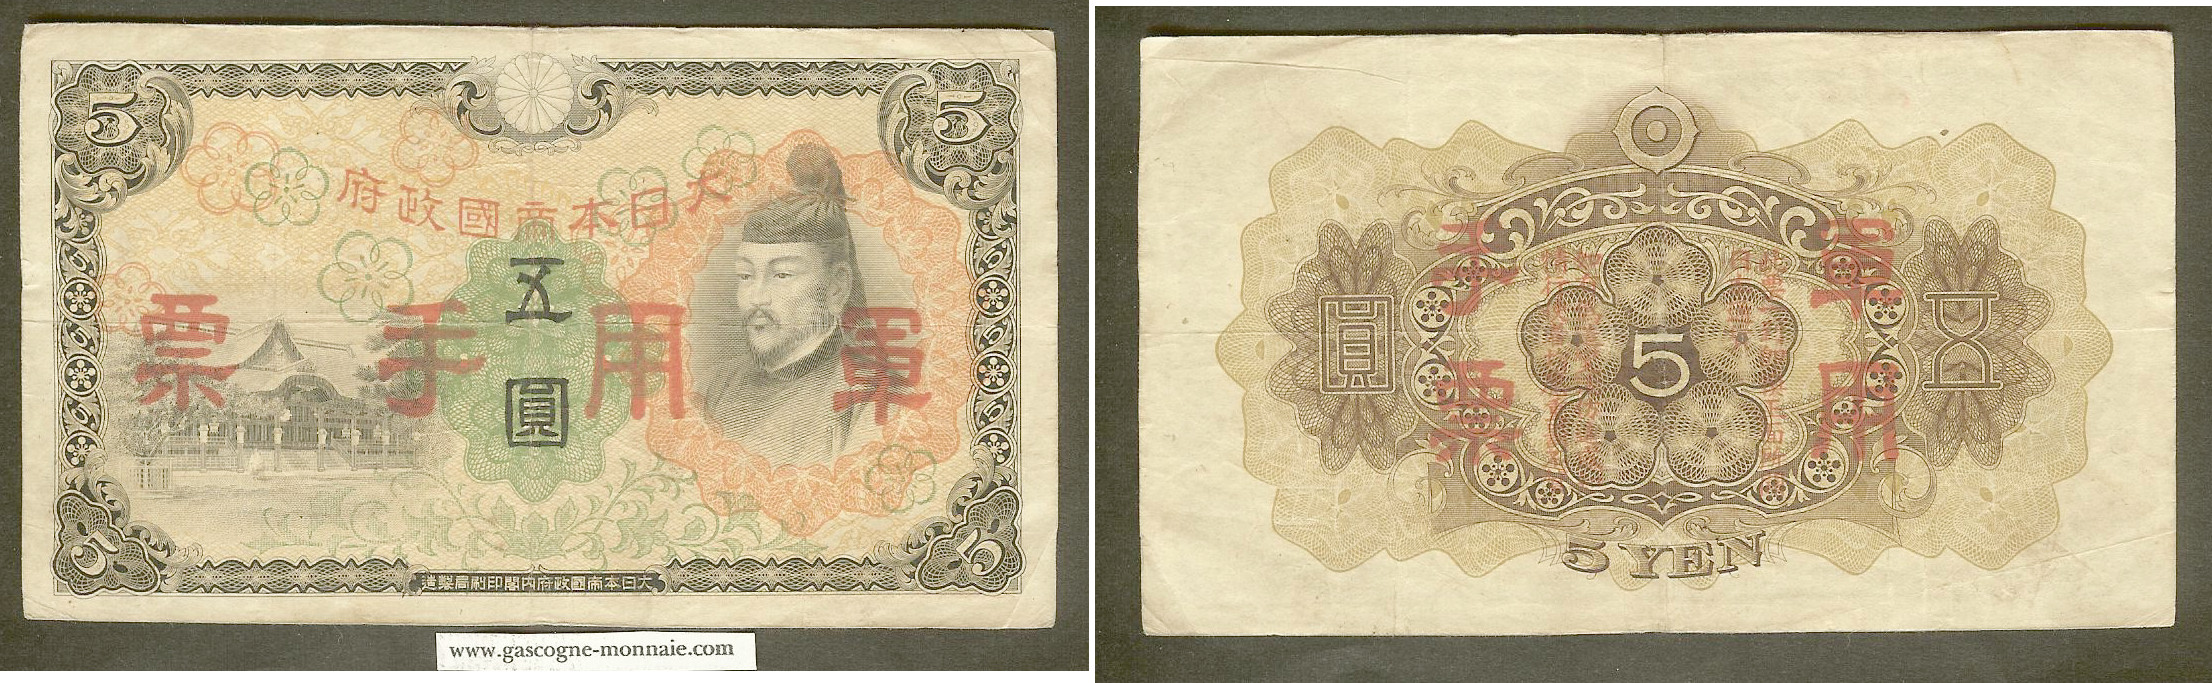 Japan 5 yen 1930 VF+